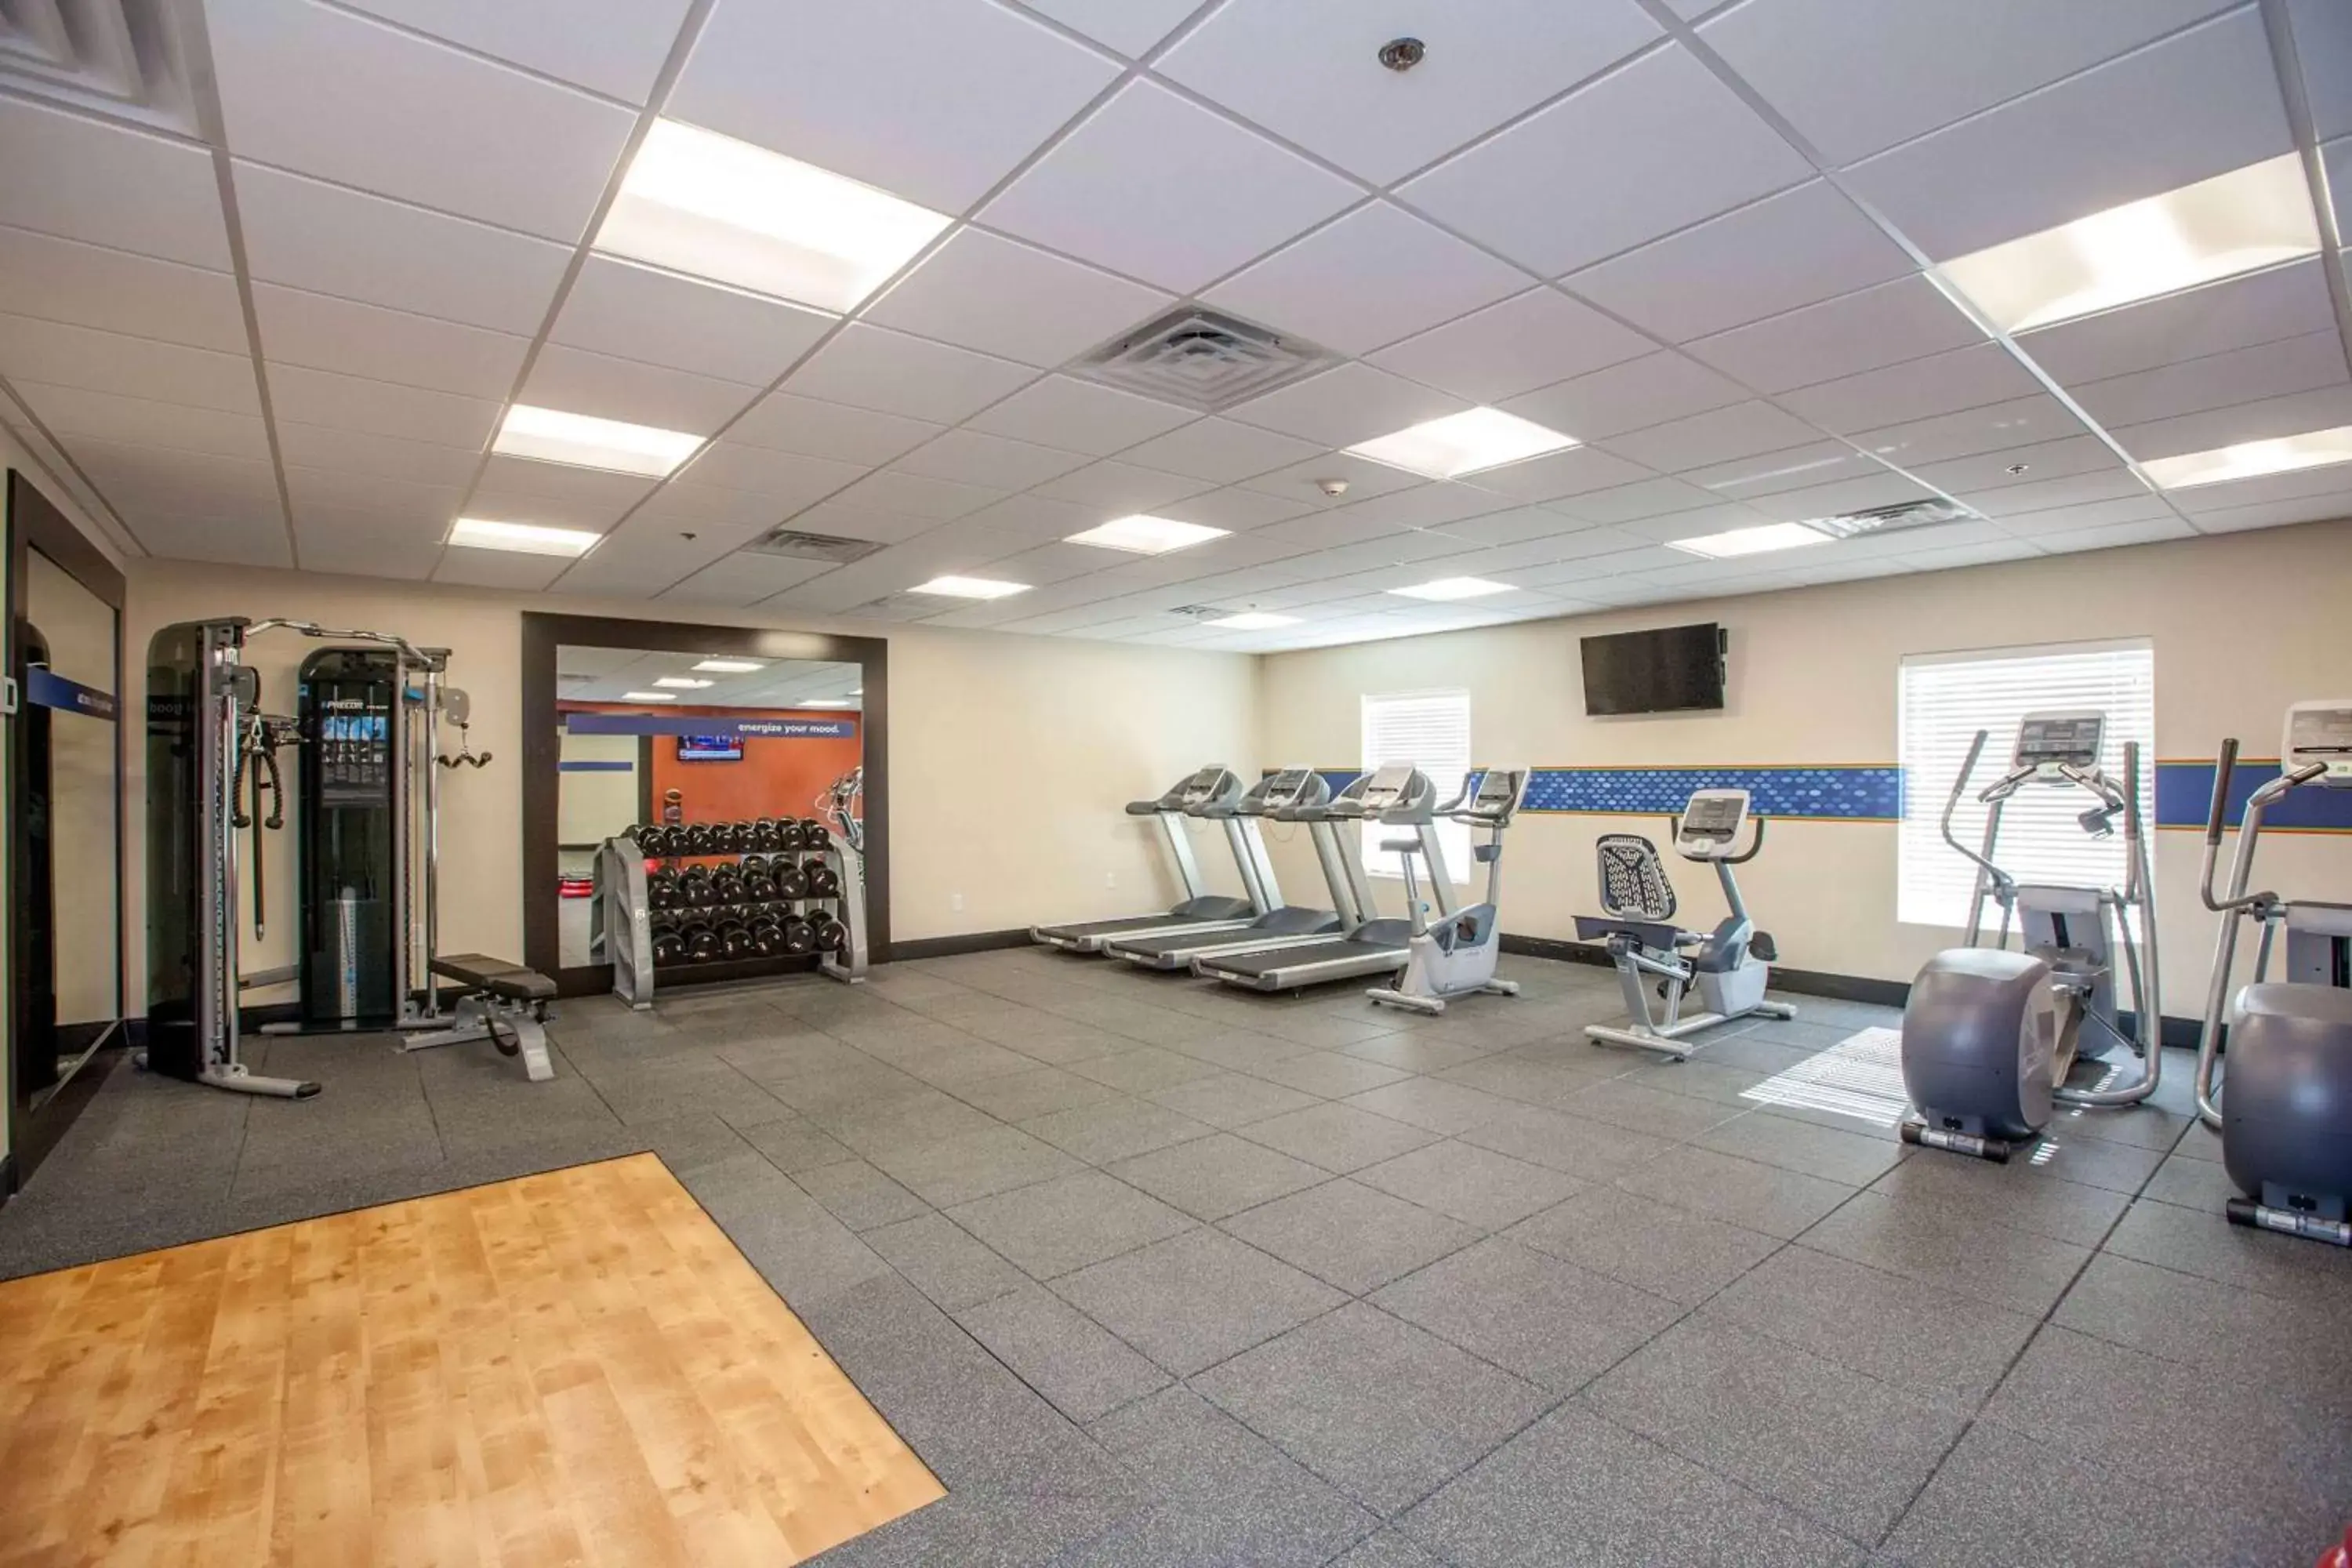 Fitness centre/facilities, Fitness Center/Facilities in Hampton Inn Emerson - Lakepoint, Ga